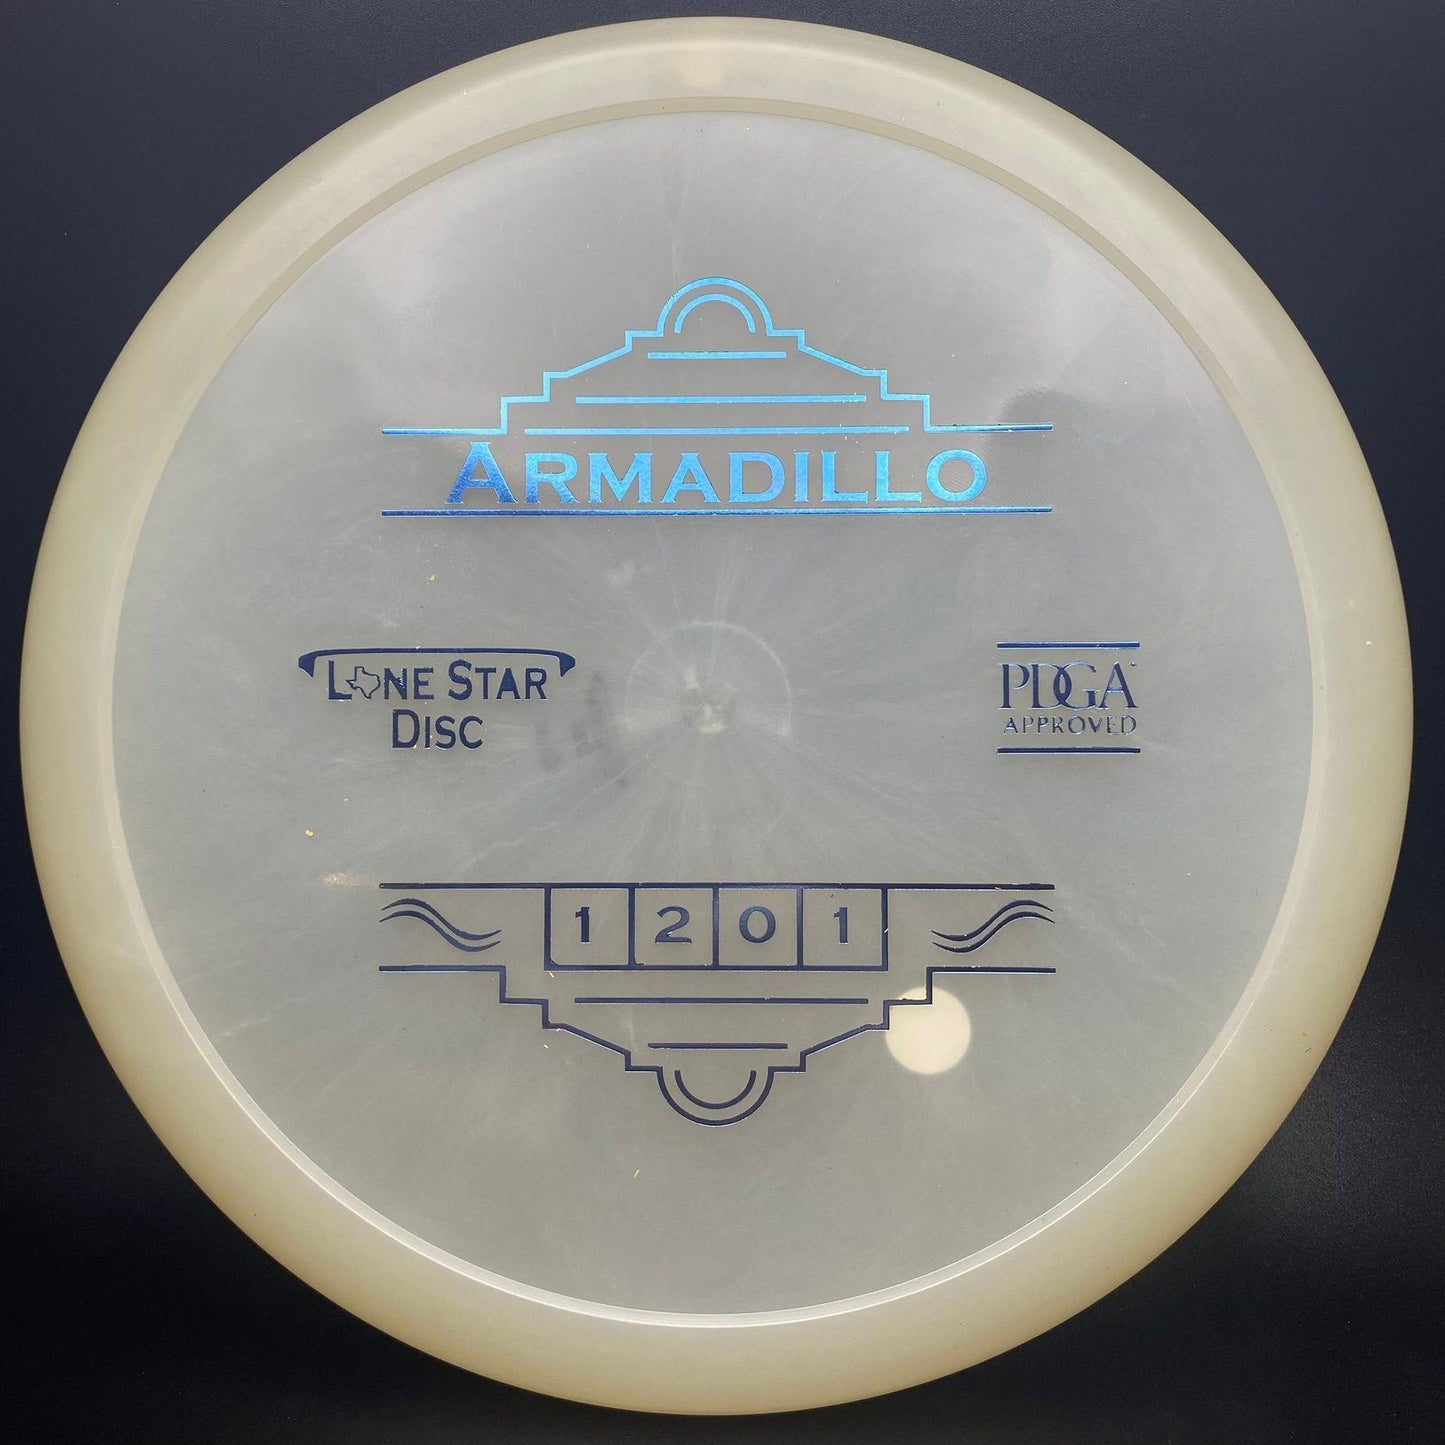 Glow Armadillo Putt Approach Lone Star Discs